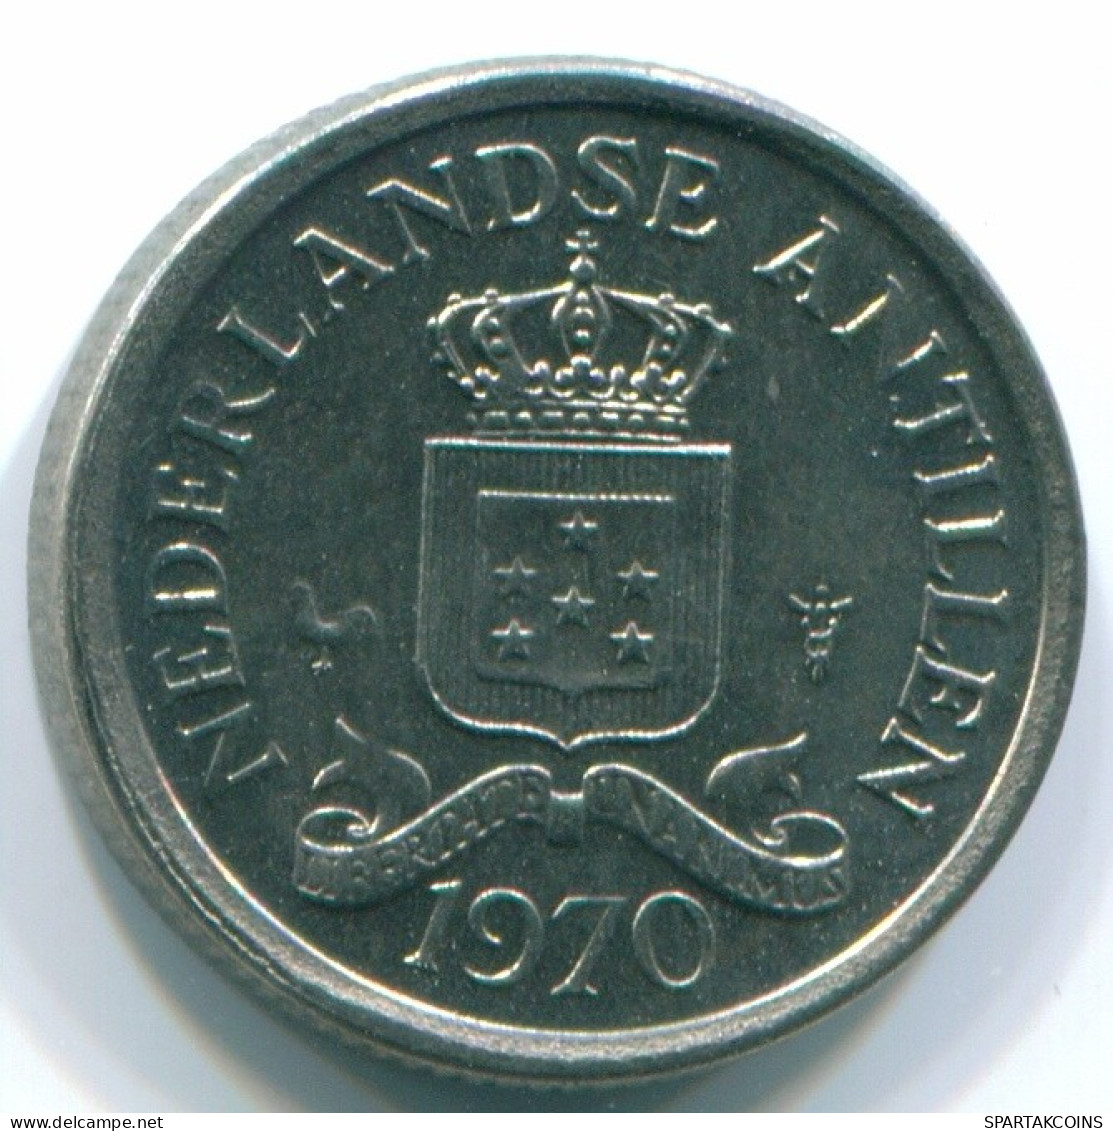 10 CENTS 1970 NETHERLANDS ANTILLES Nickel Colonial Coin #S13340.U.A - Nederlandse Antillen